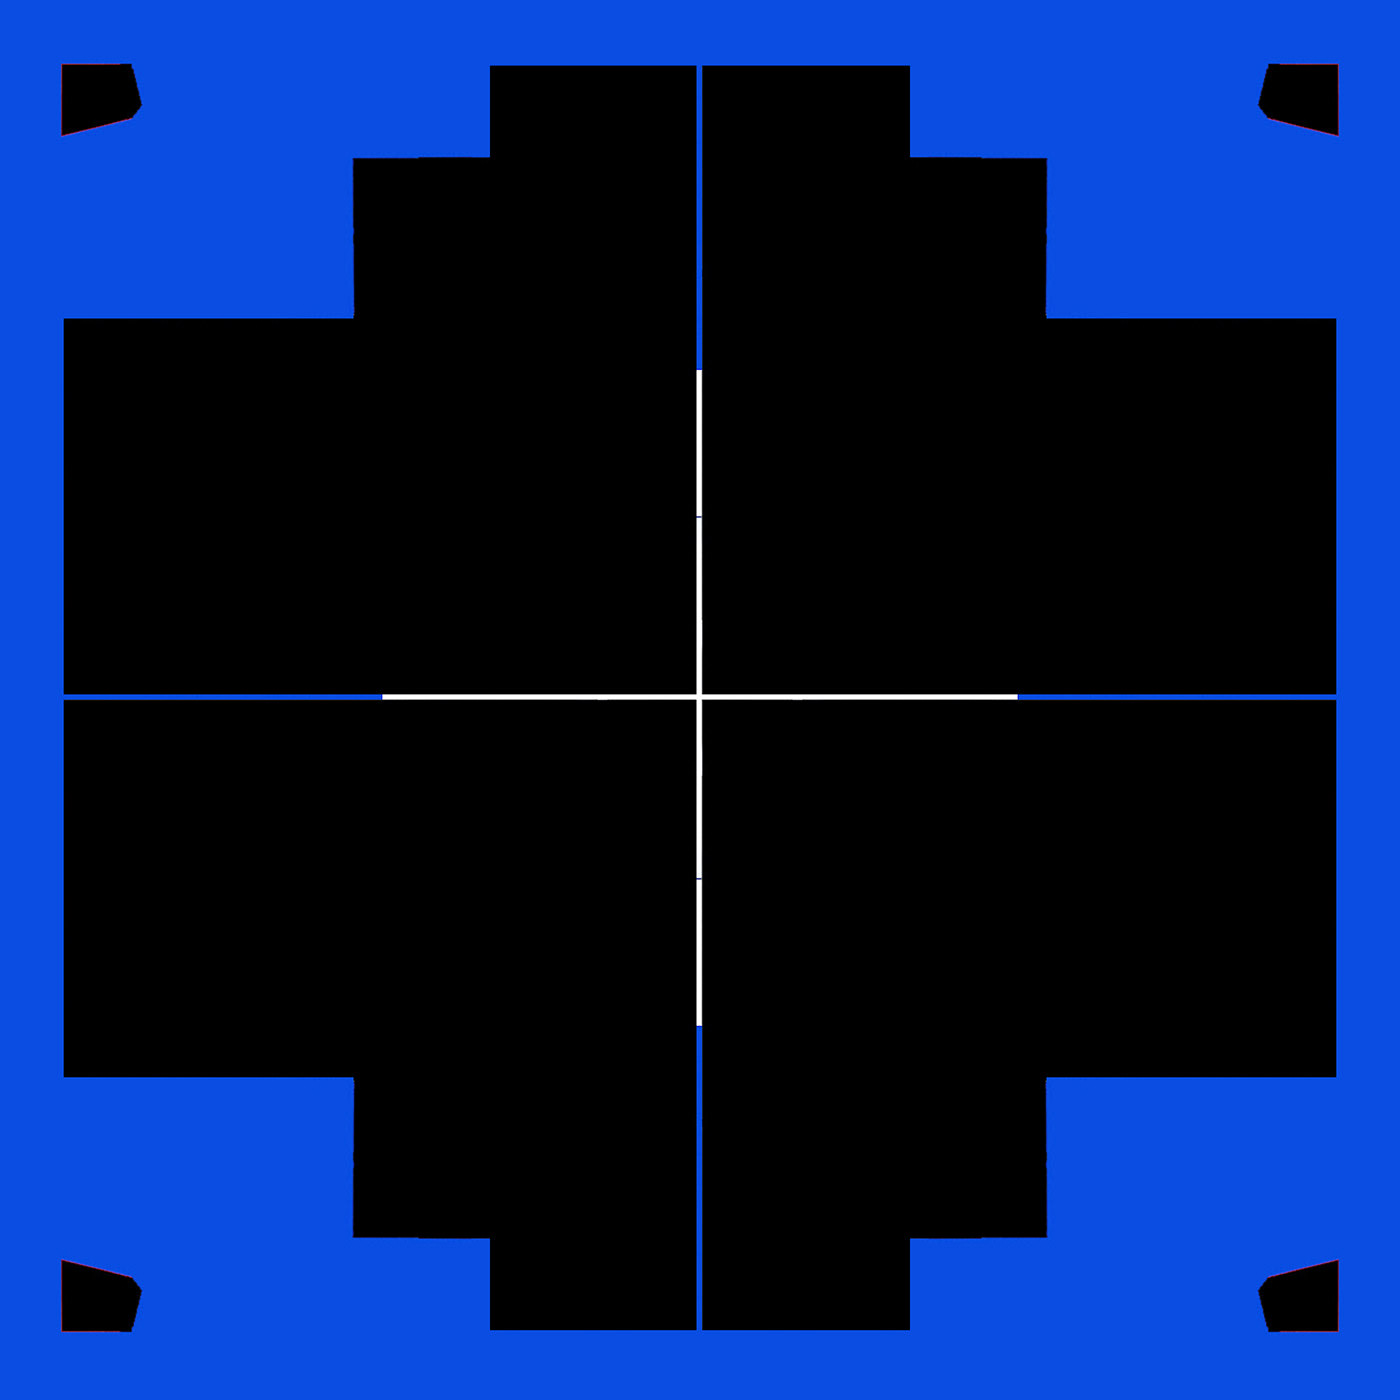 contrast blue black geometric abstract pattern Digital Art  modern Surface Pattern dessin numérique 